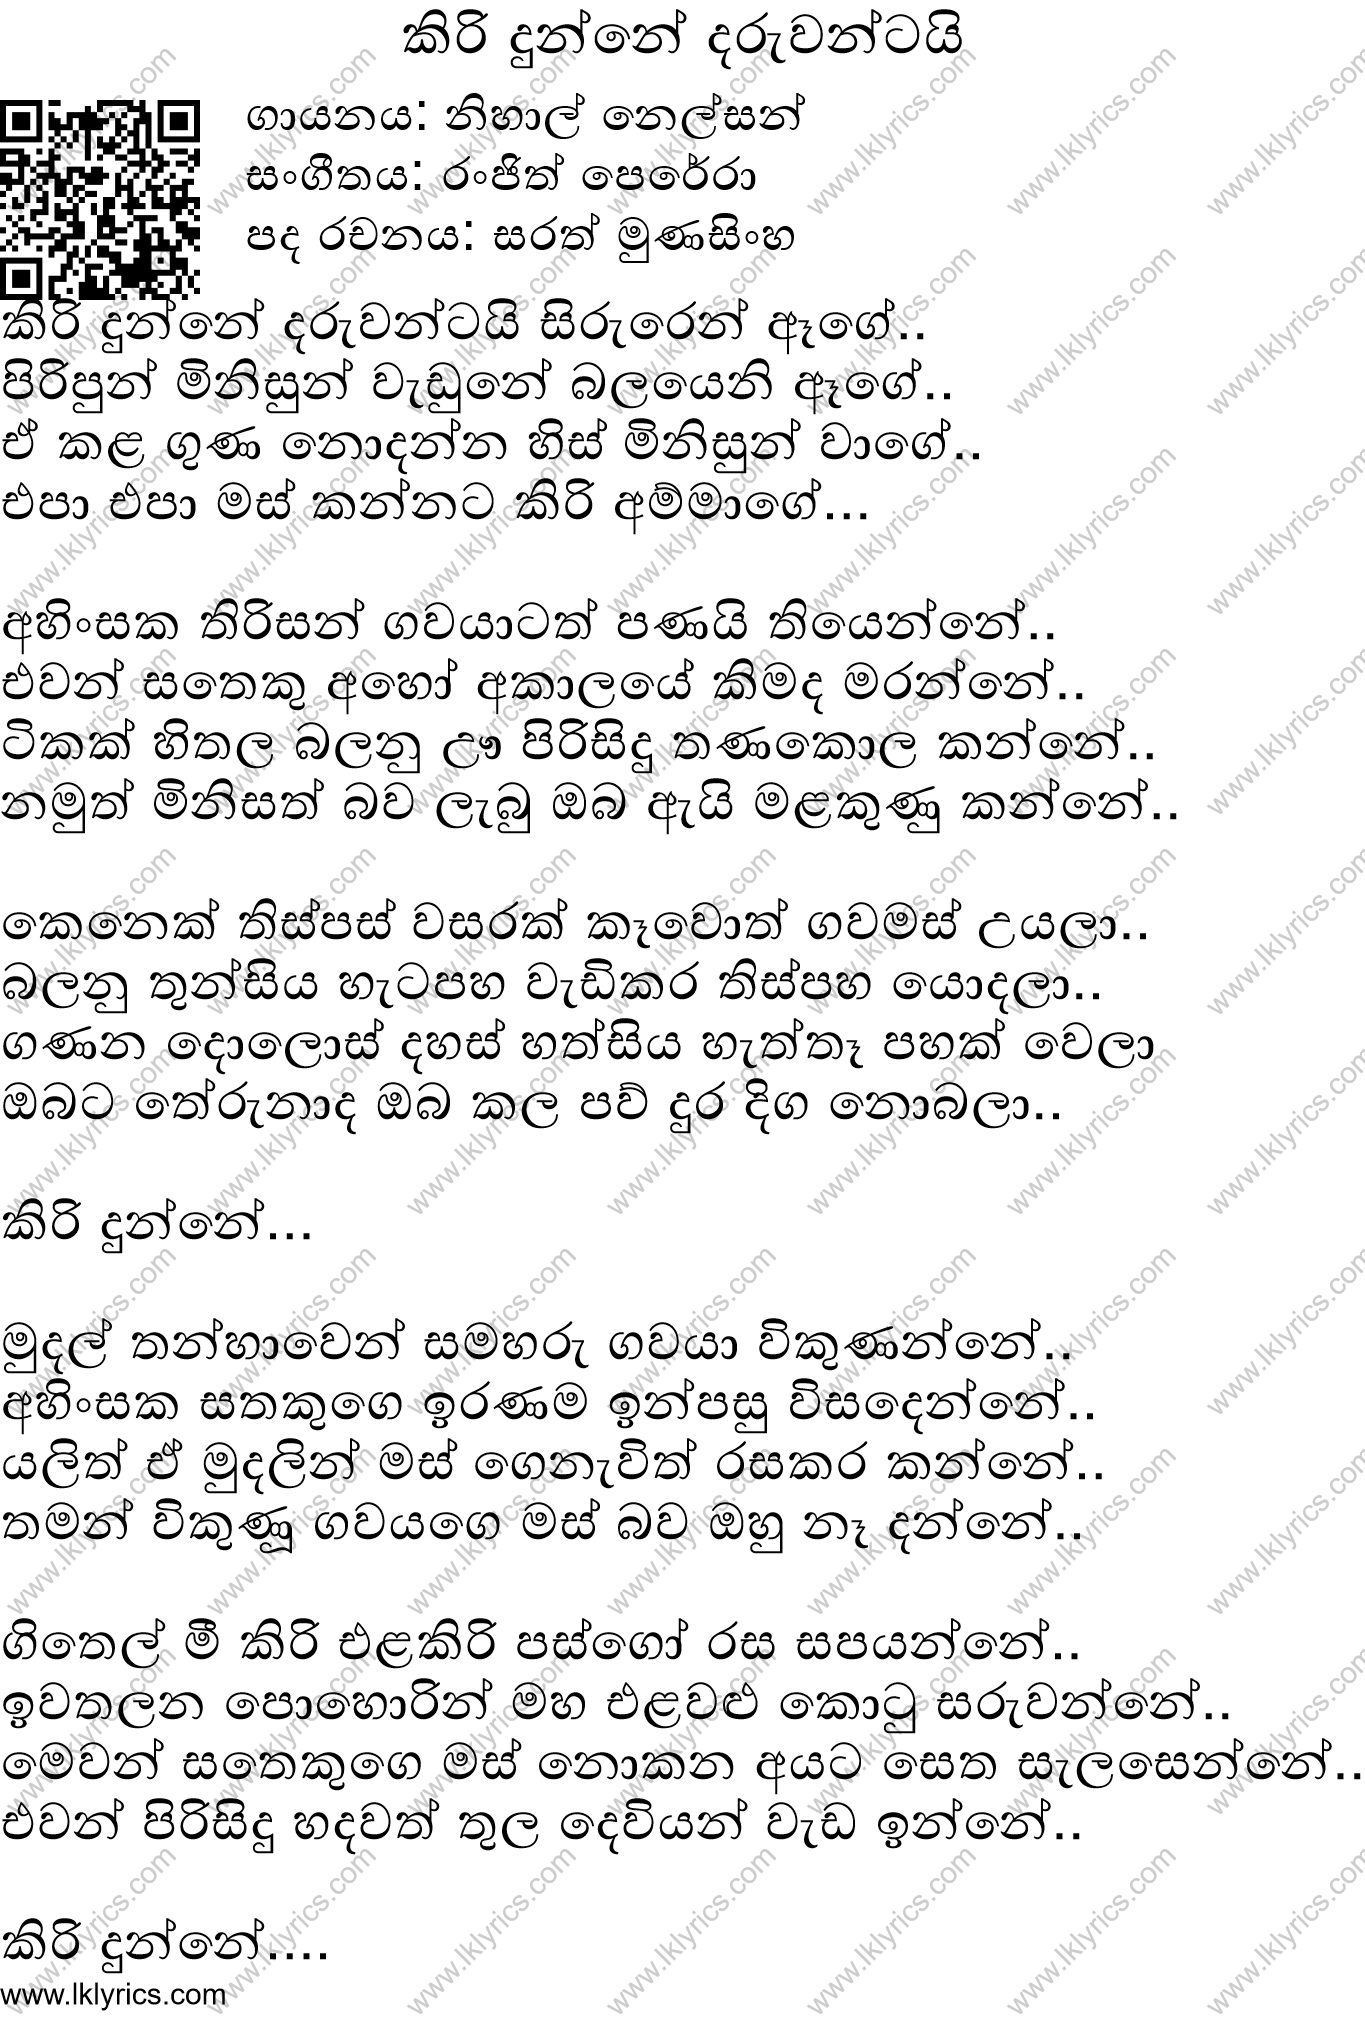 Baila Wendesiya Lyrics In Sinhala - Baila Wendesiya Karoki With Lyrics